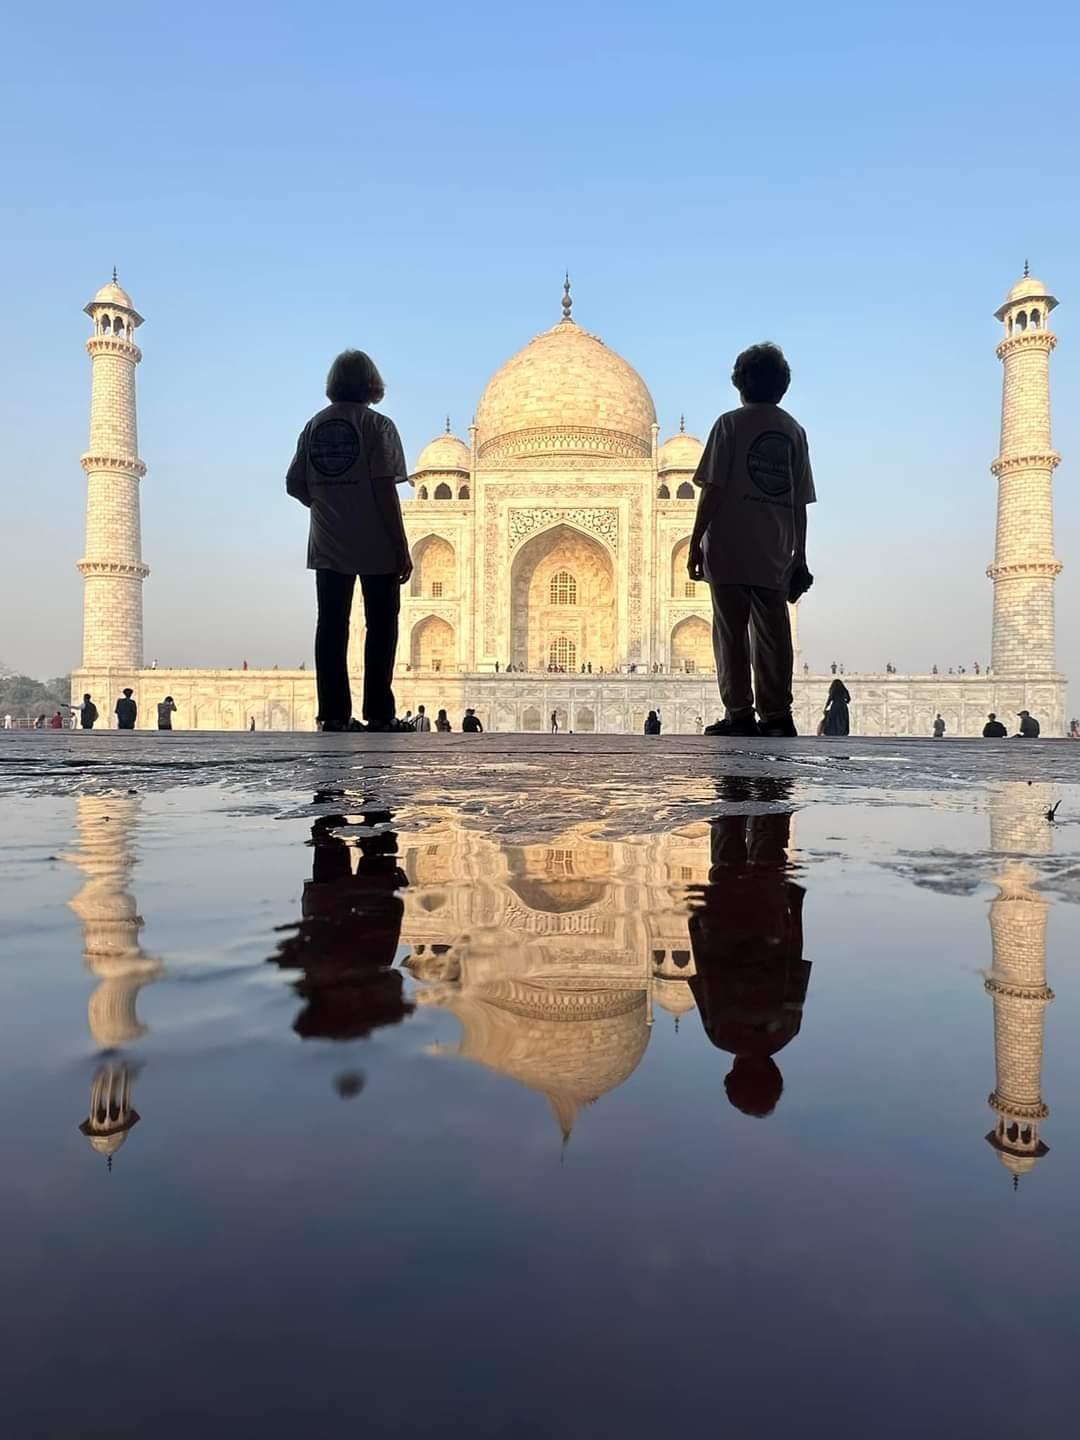 The Taj Mahal in India. (Courtesy of Around the World at 80)